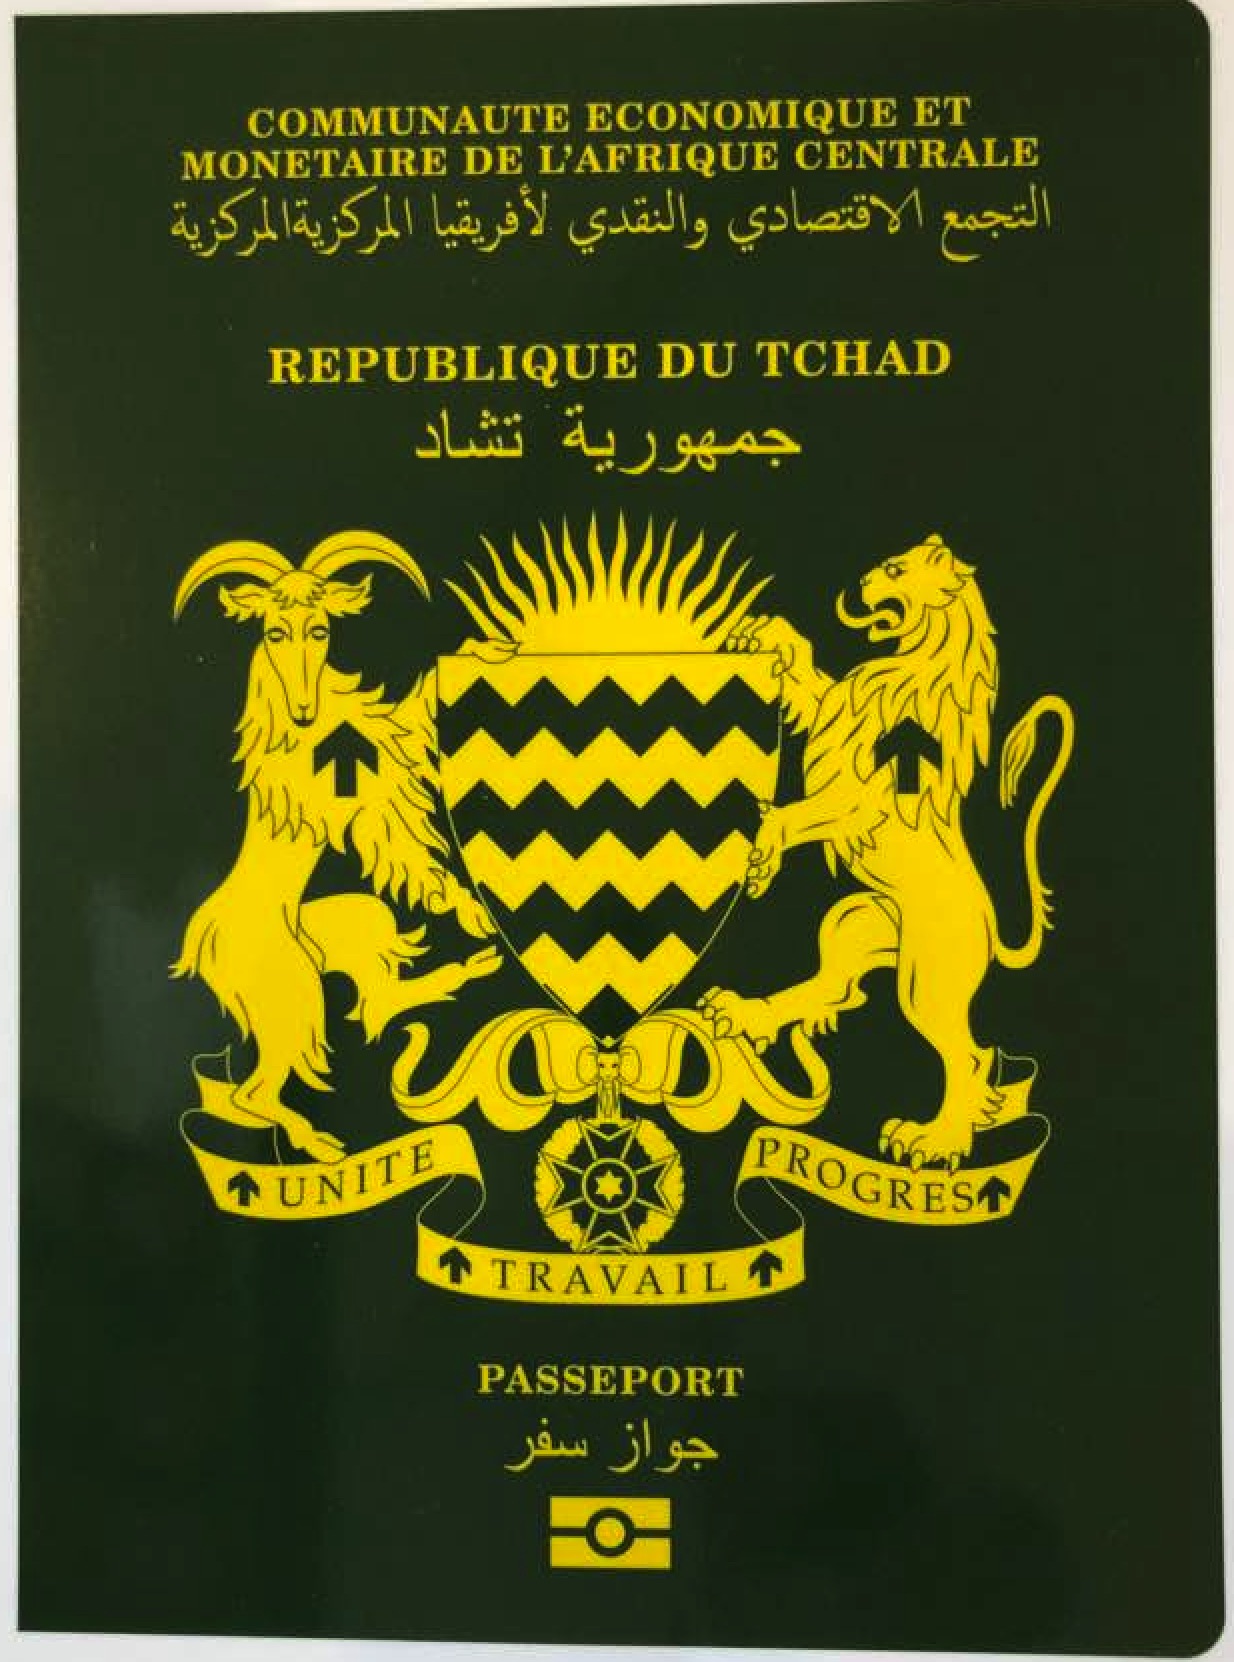 Vietnam visa requirement for Chadian